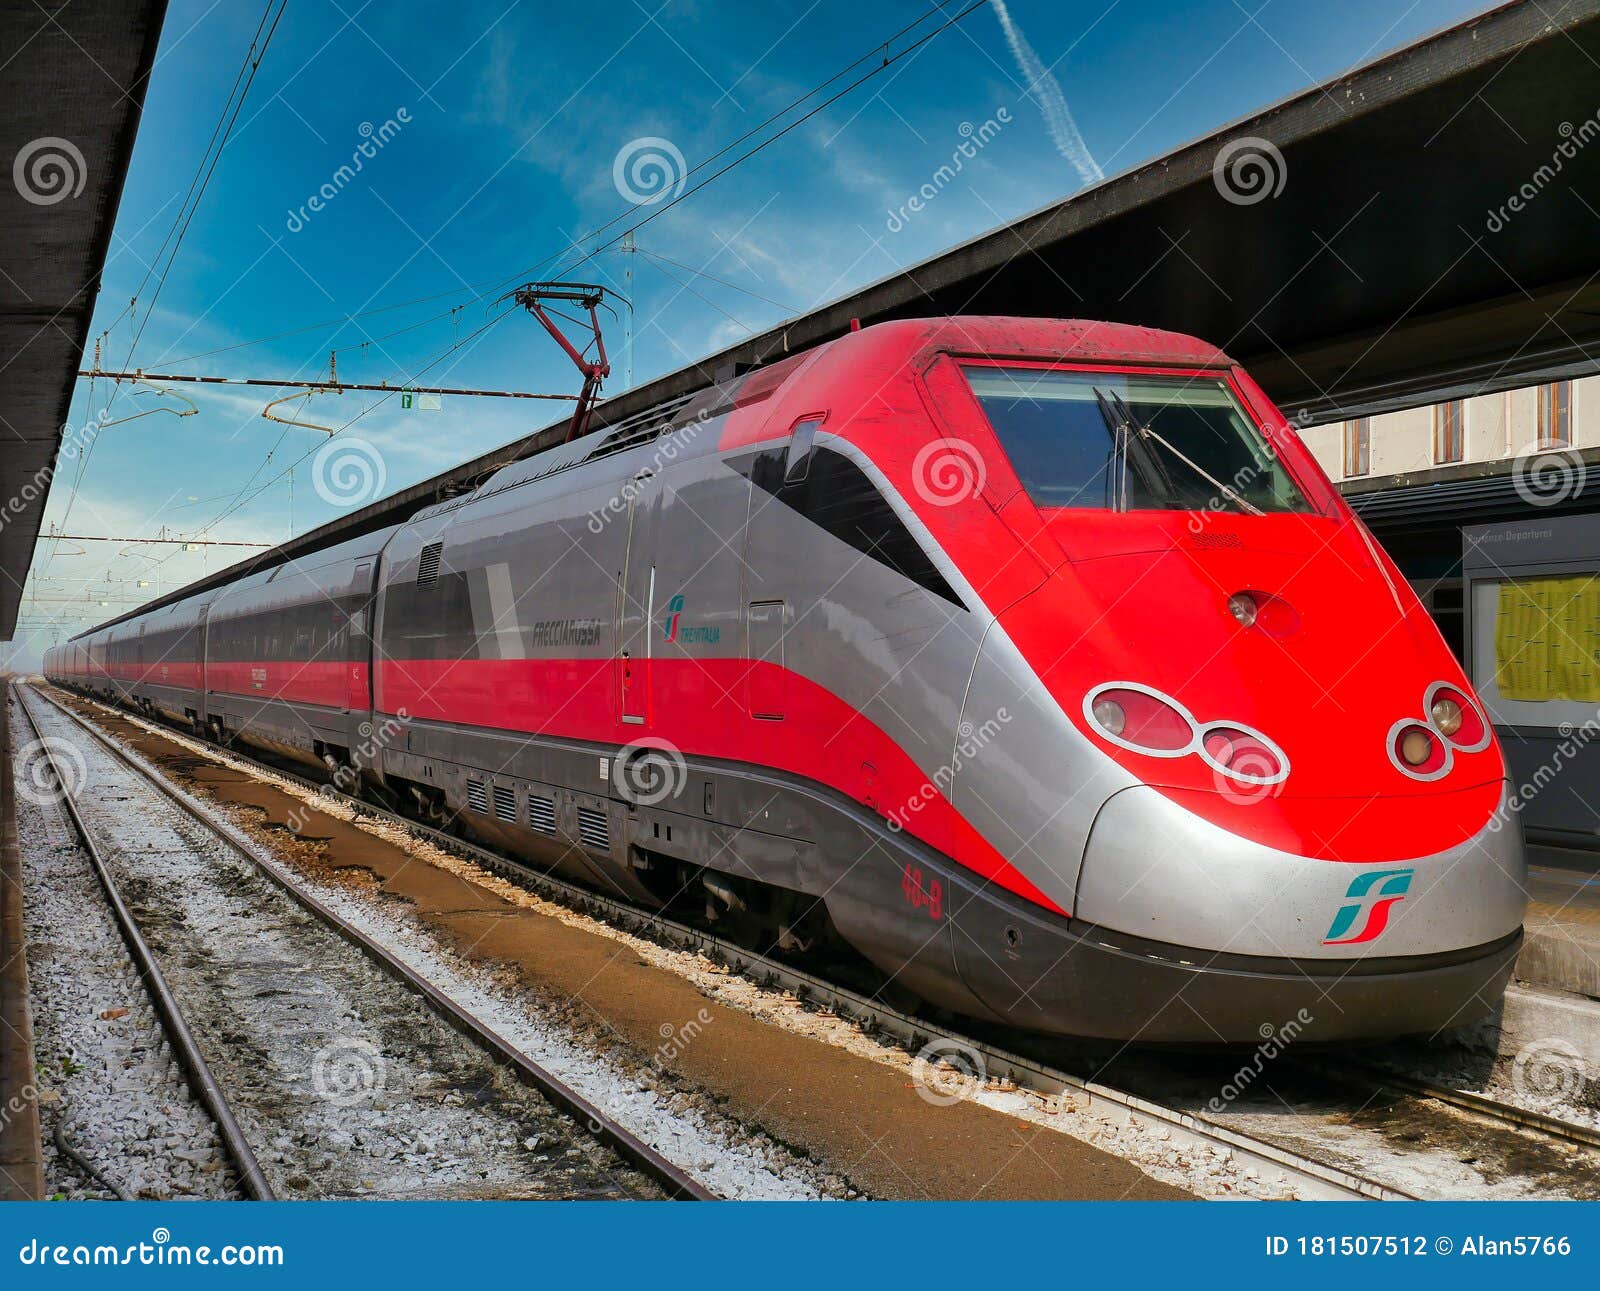 A National Rail Operator, Italy Frecciarossa Red Arrow High Speed Train in Editorial Photography - Image trenitalia, locomotive: 181507512